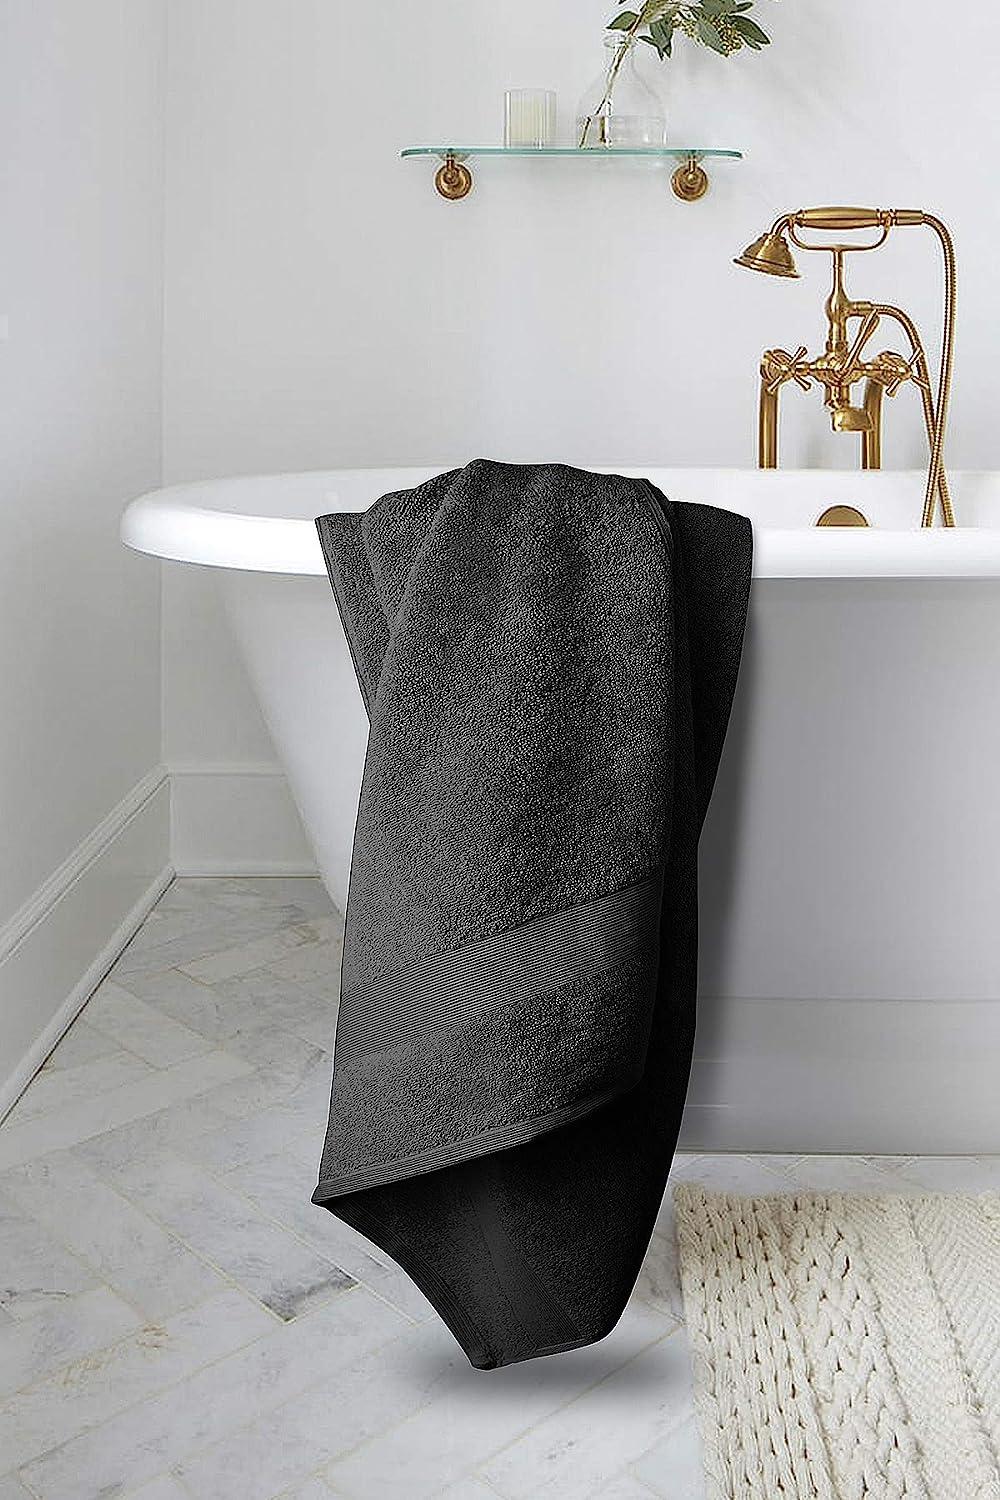 Softolle 100% Cotton Luxury Bath Towels - 600 GSM Cotton Towels